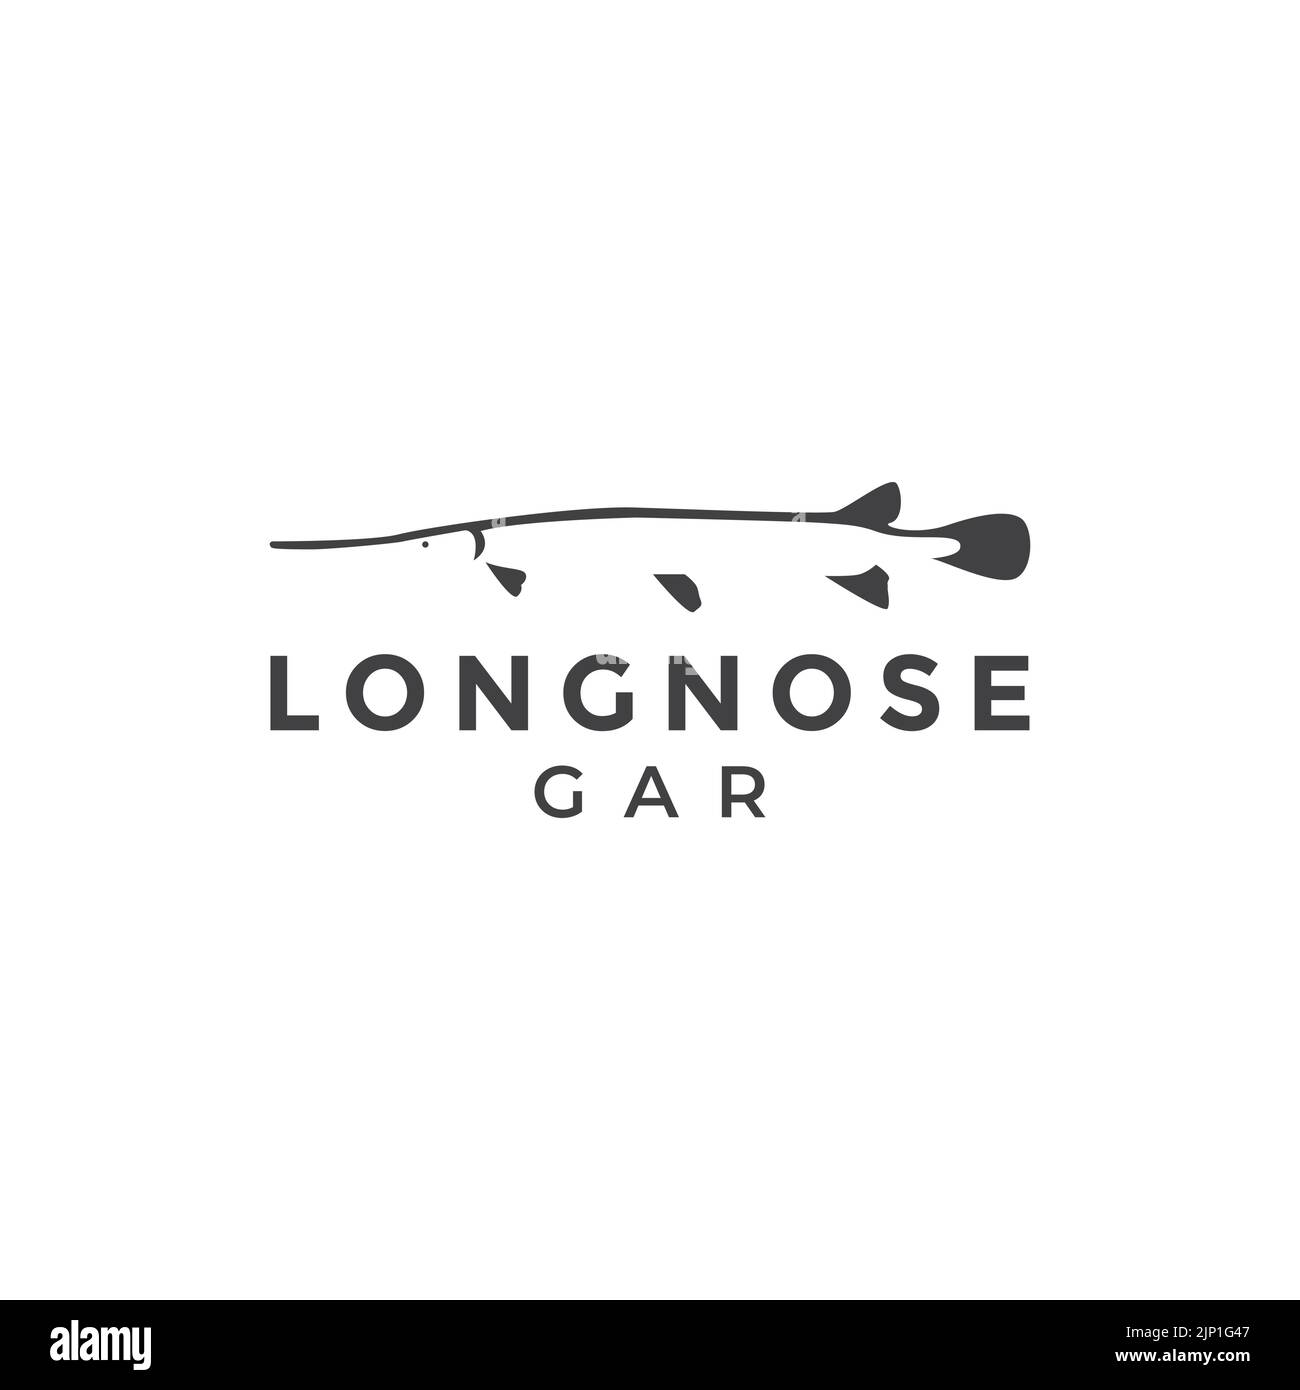 logo fish longnose gar minimaliste Illustration de Vecteur